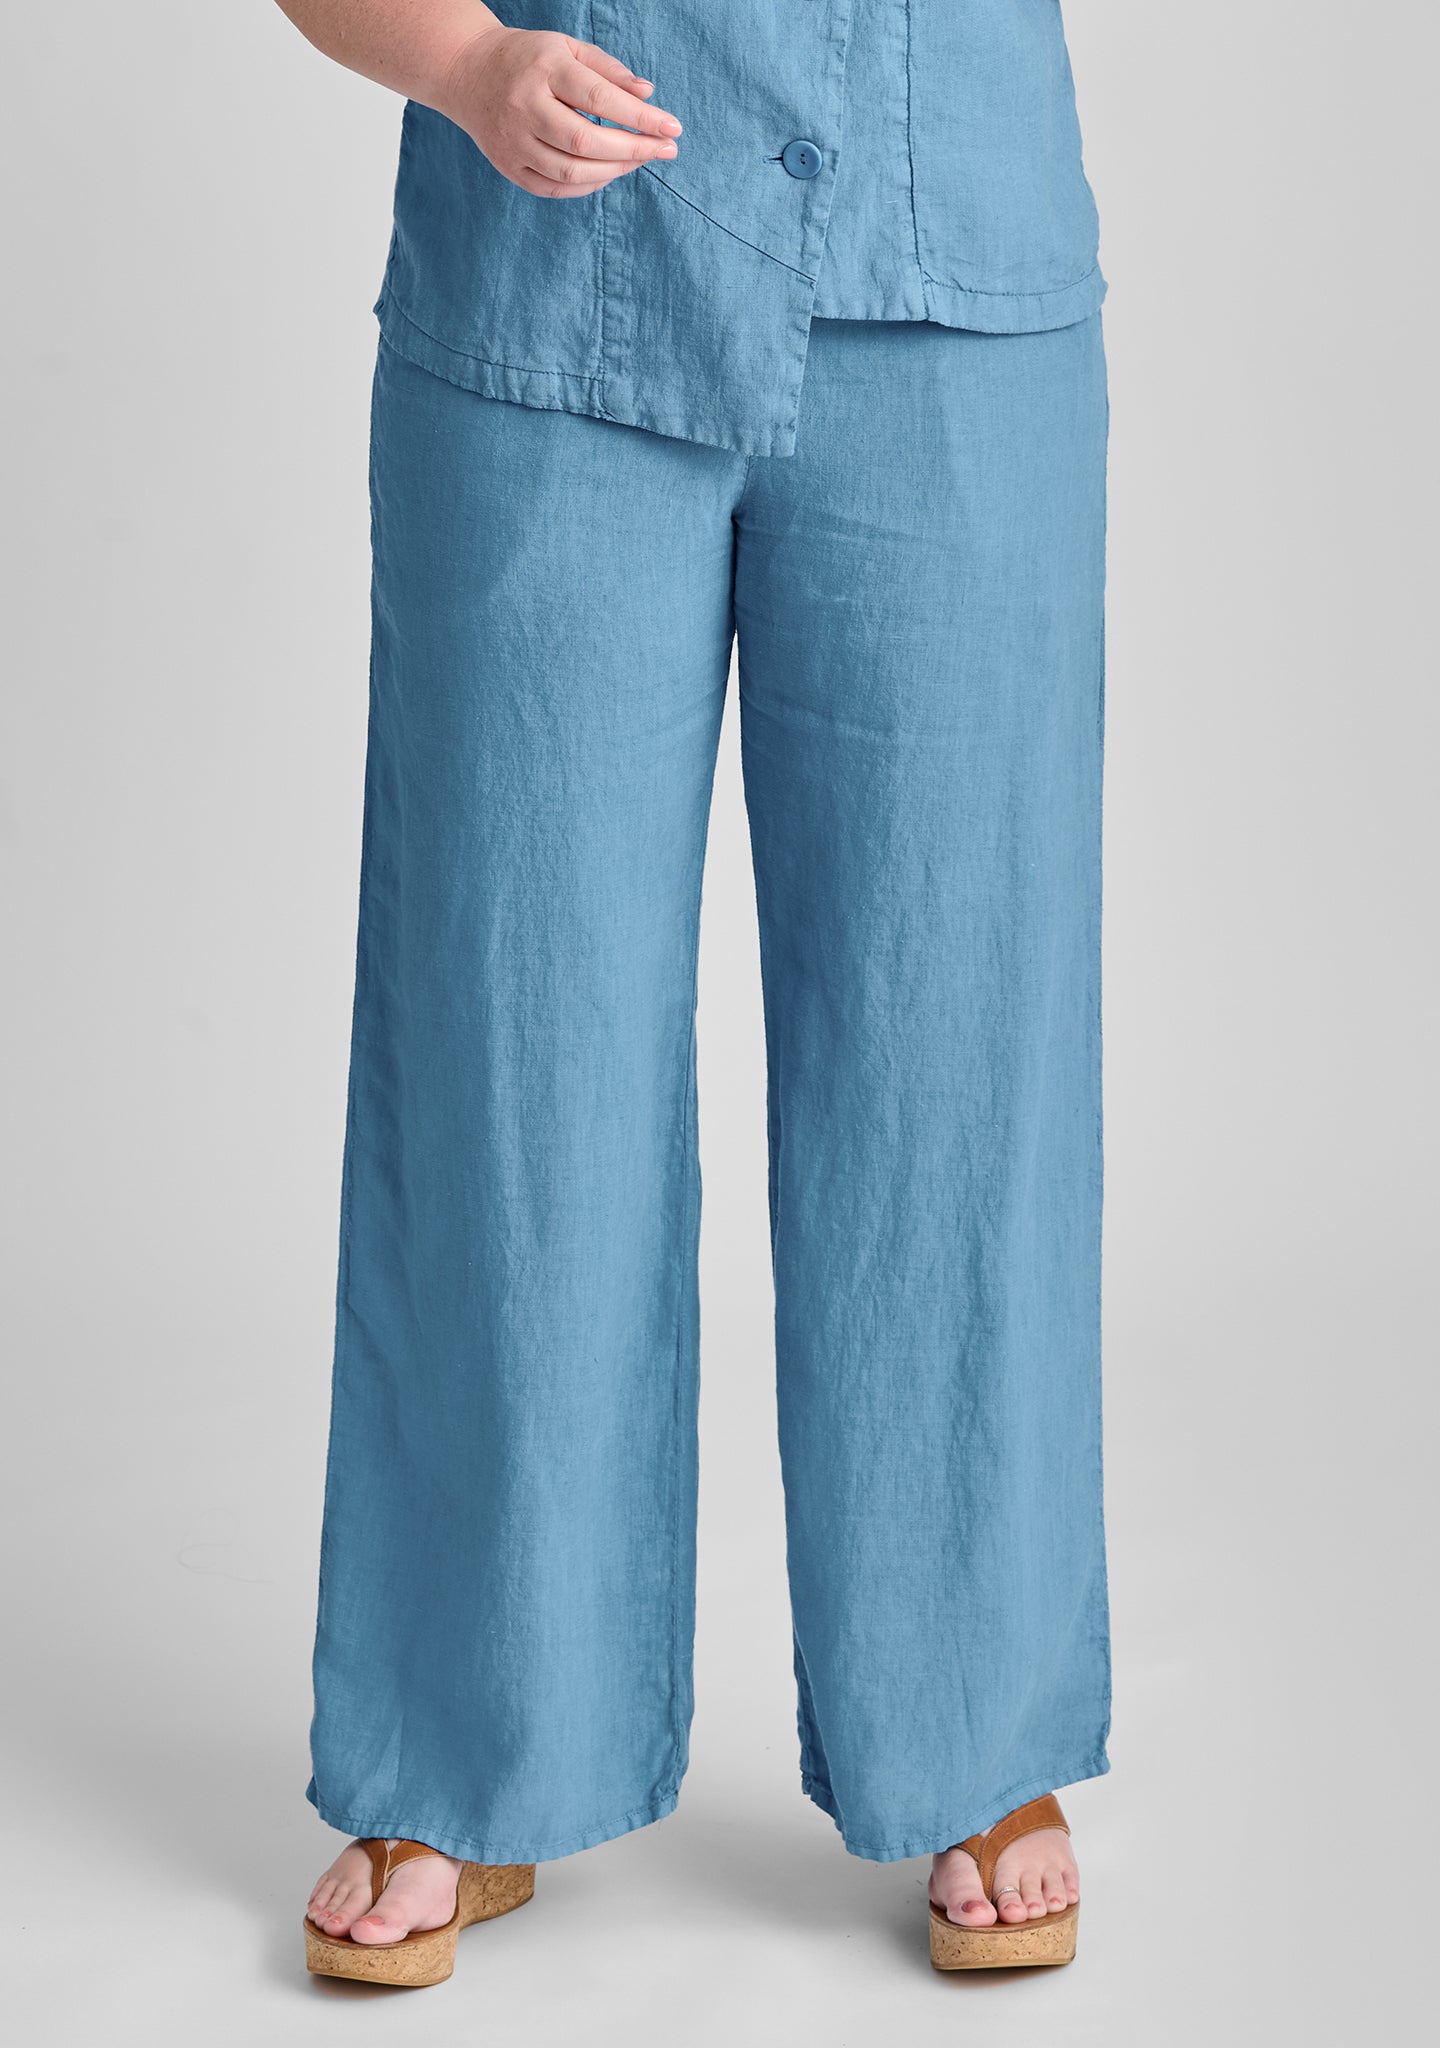 flat iron pant linen drawstring pants blue